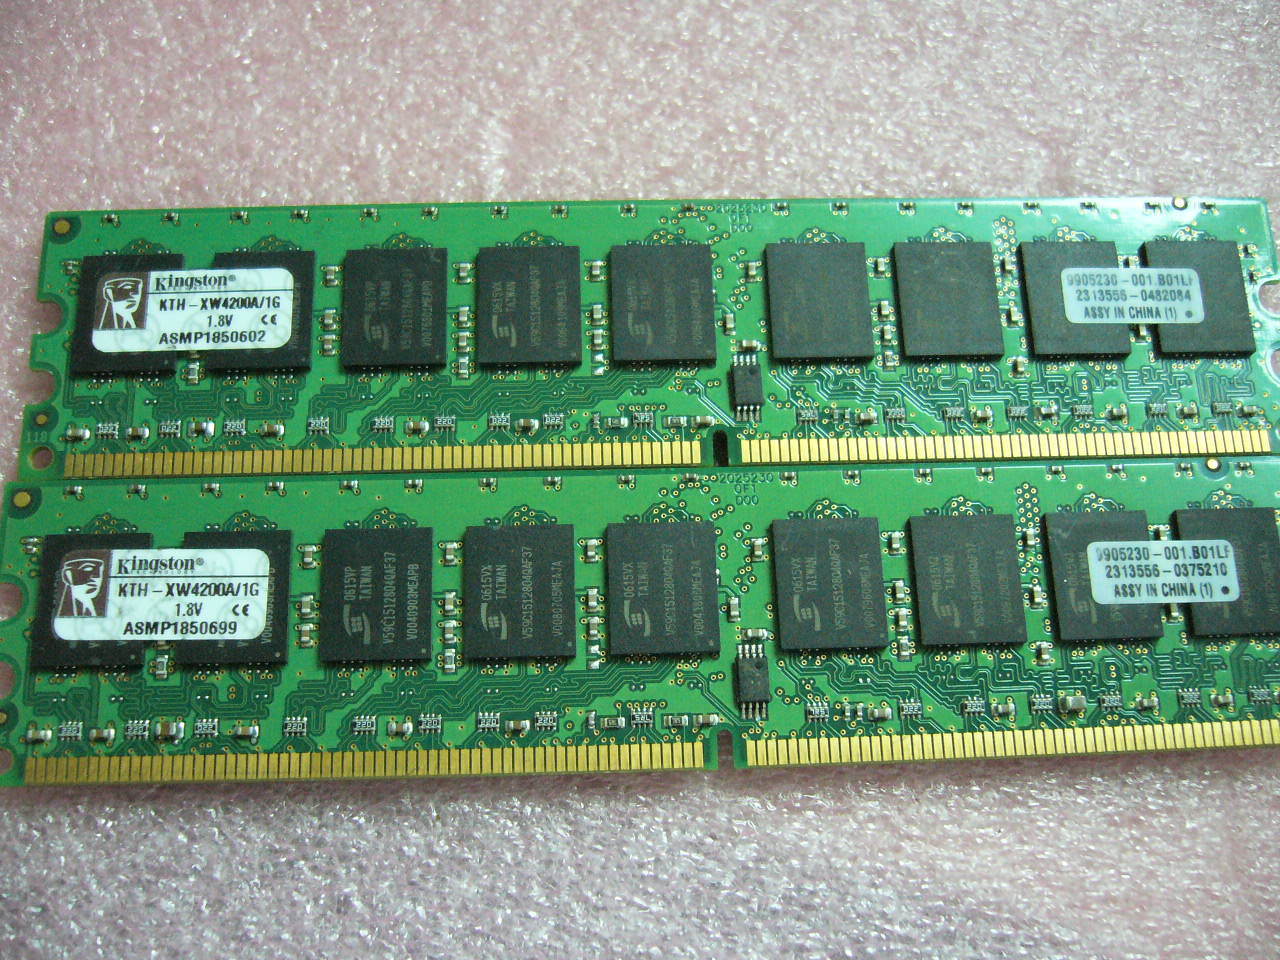 QTY 1x 1GB DDR2 PC2-4200E 533Mhz ECC workstation memory Kingston KTH-XW4200A/1G